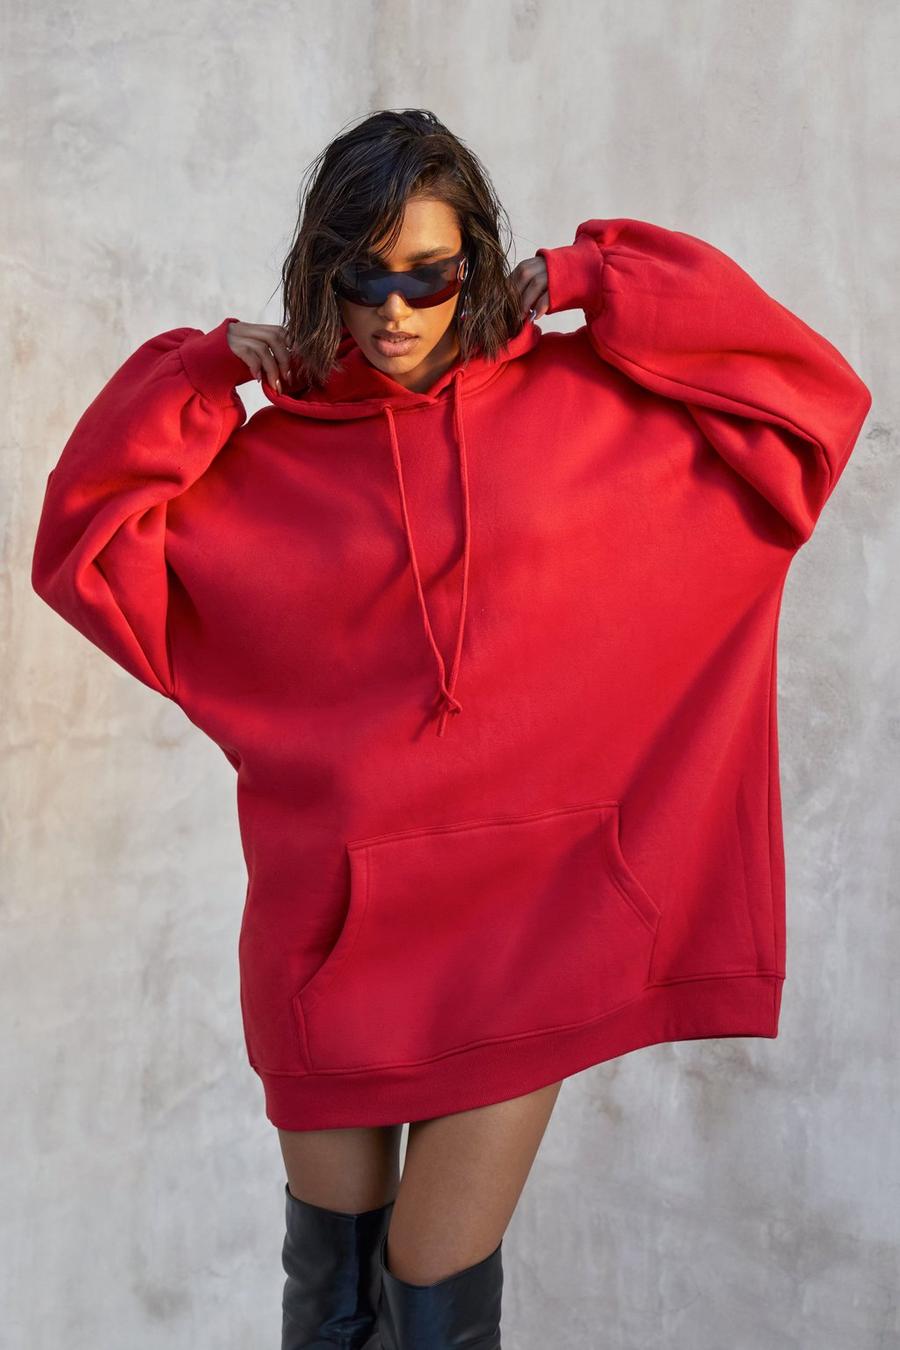 Red Kourtney Kardashian Barker Oversized Hoodie